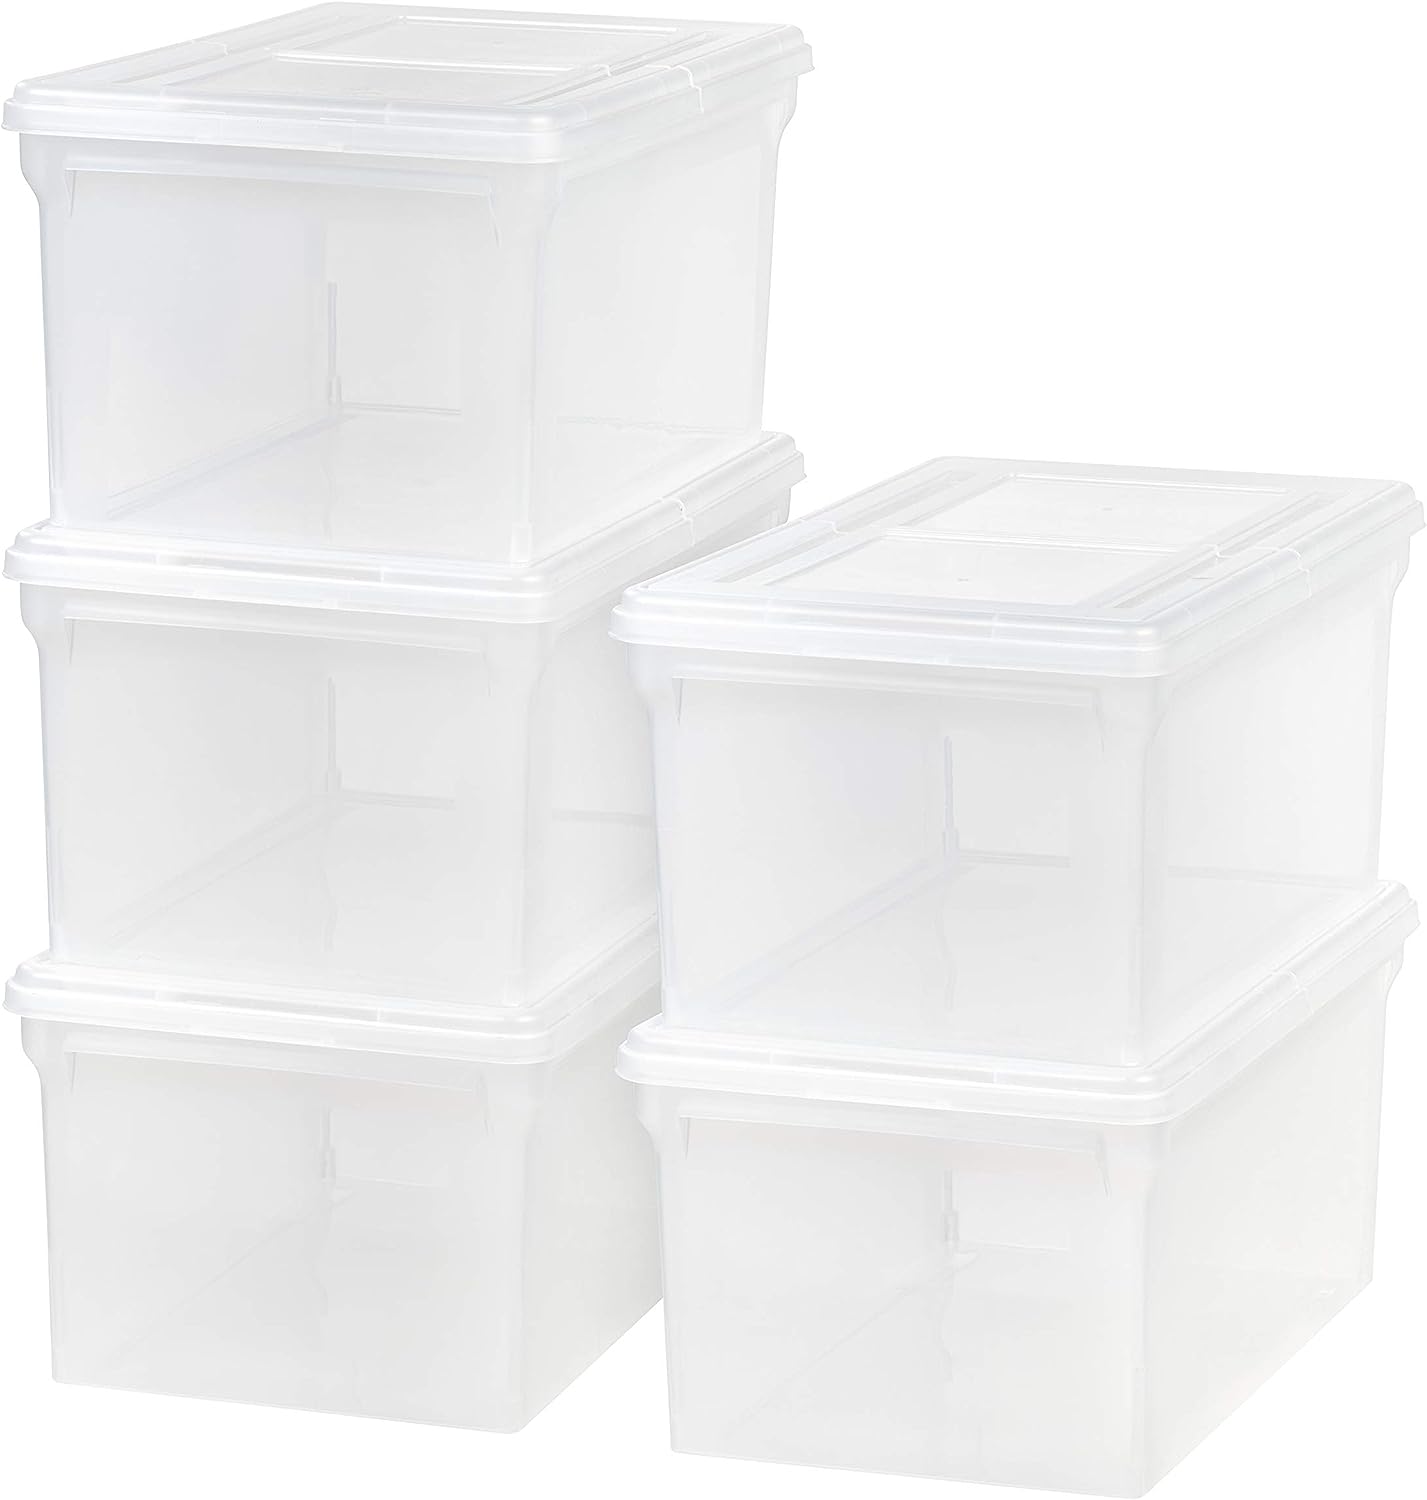 File box Storage & Organization at